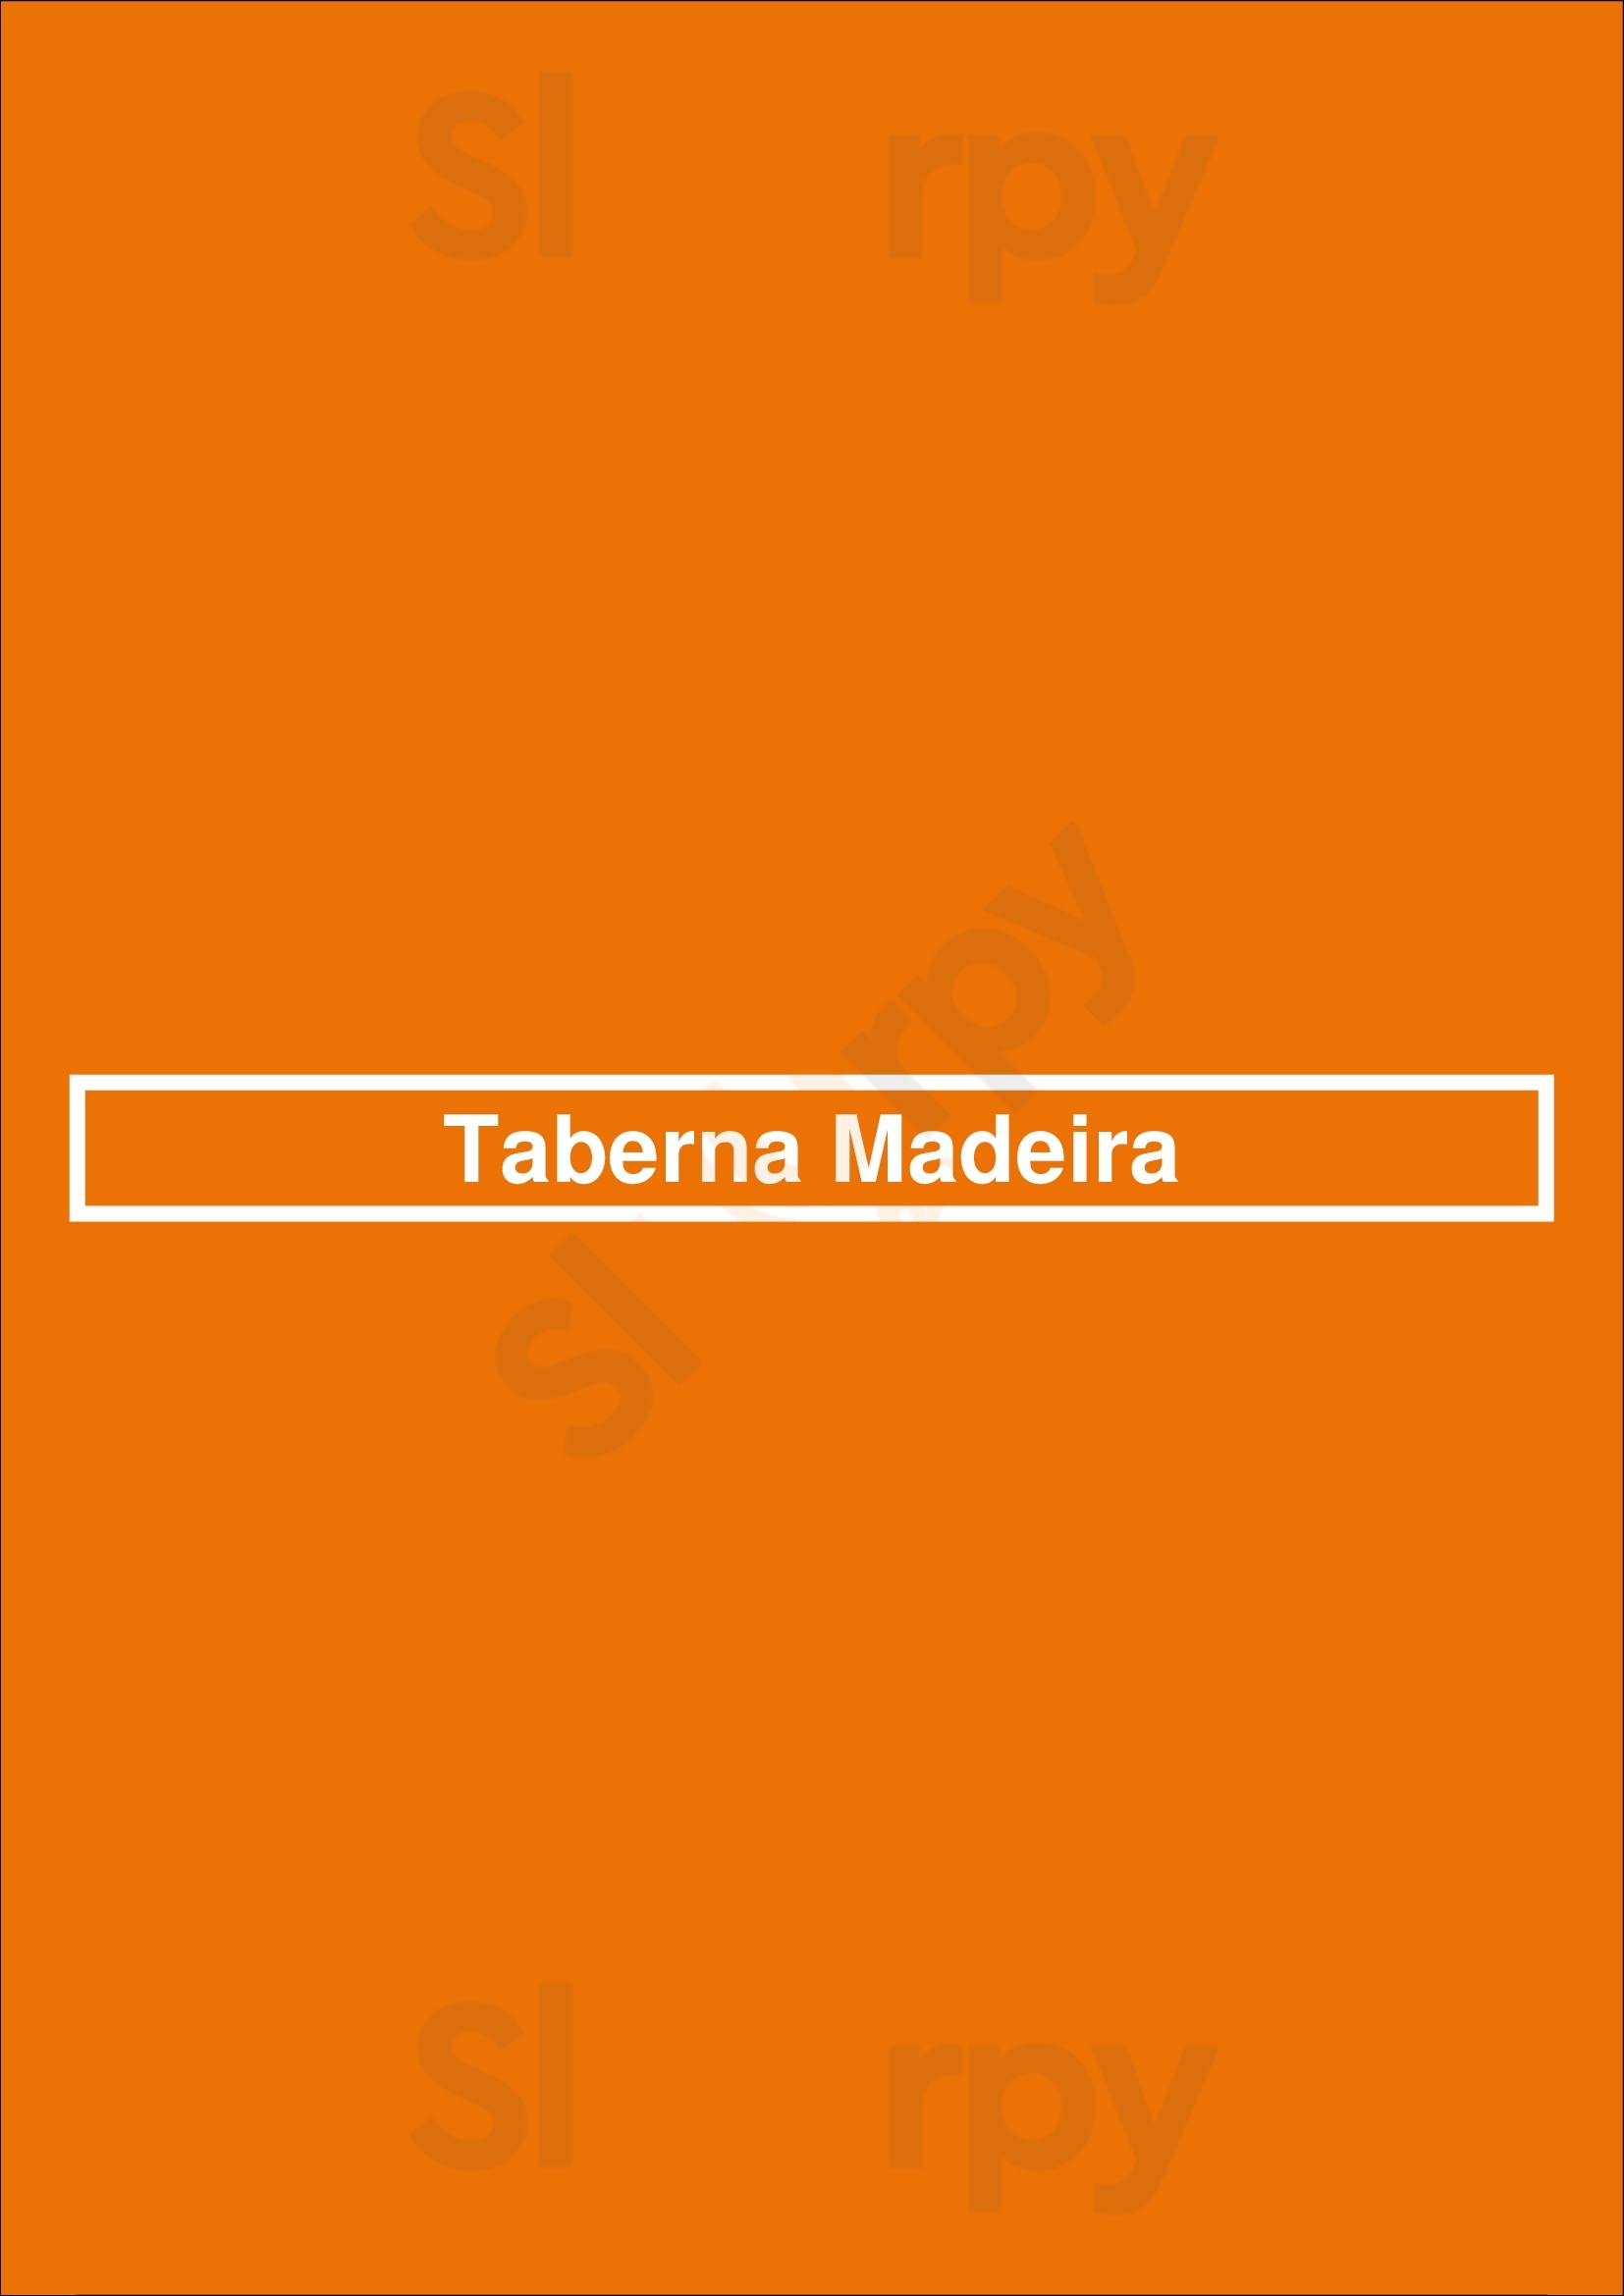 Taberna Madeira Funchal Menu - 1